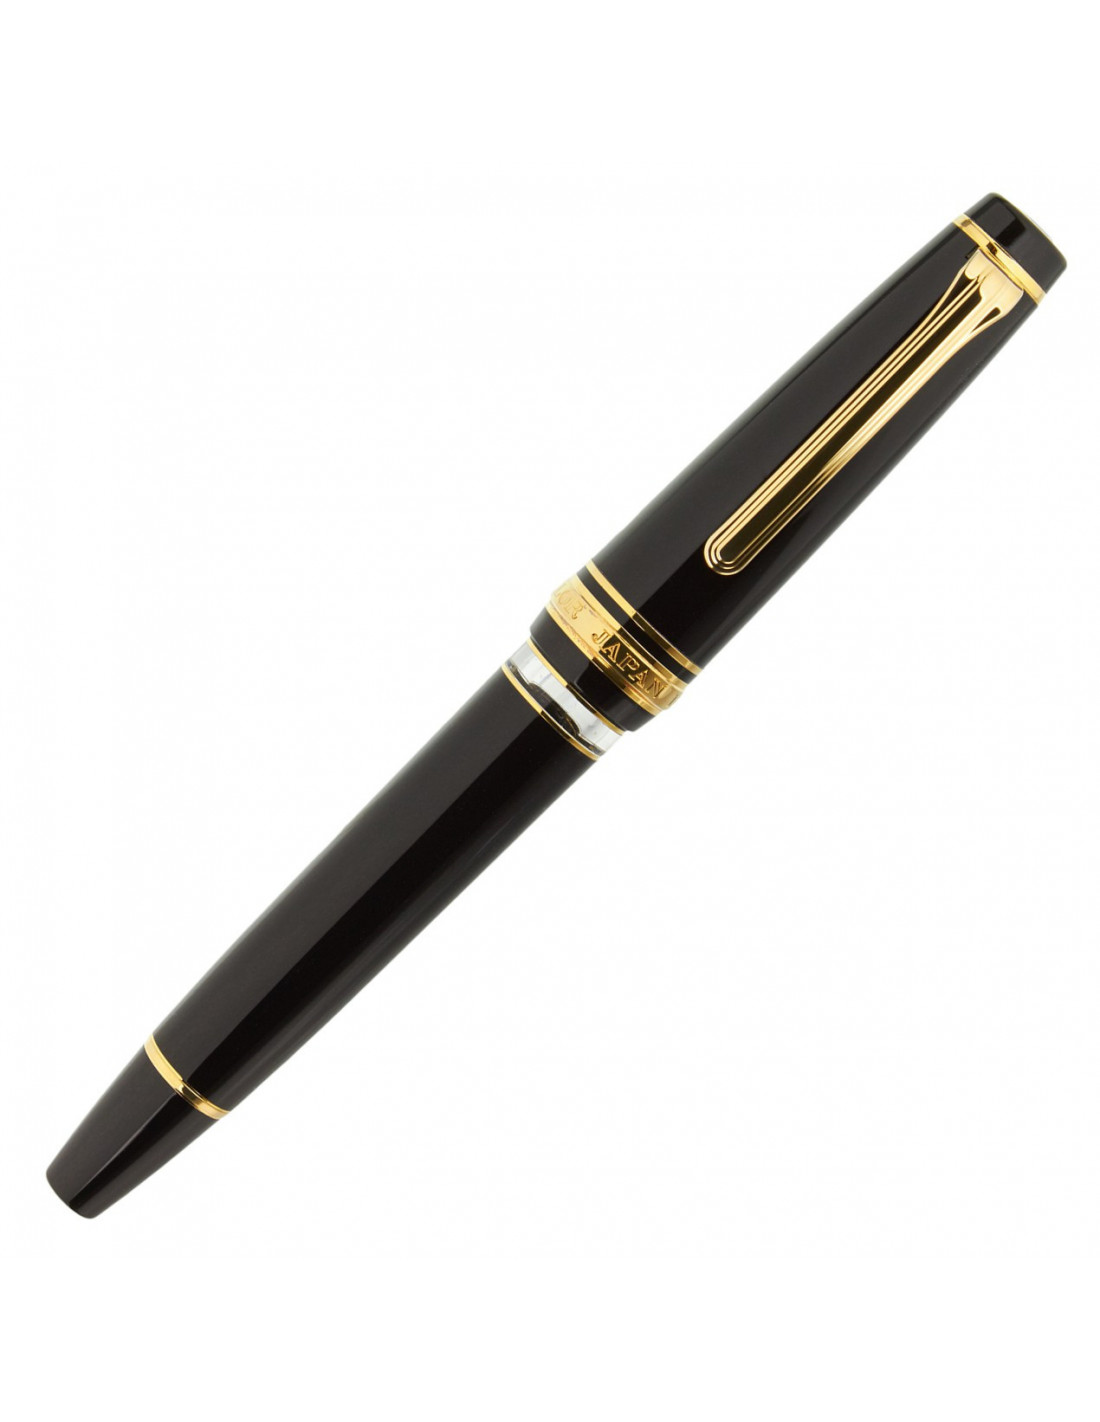 Sailor Professional Gear REALO Fountain Pen - Black